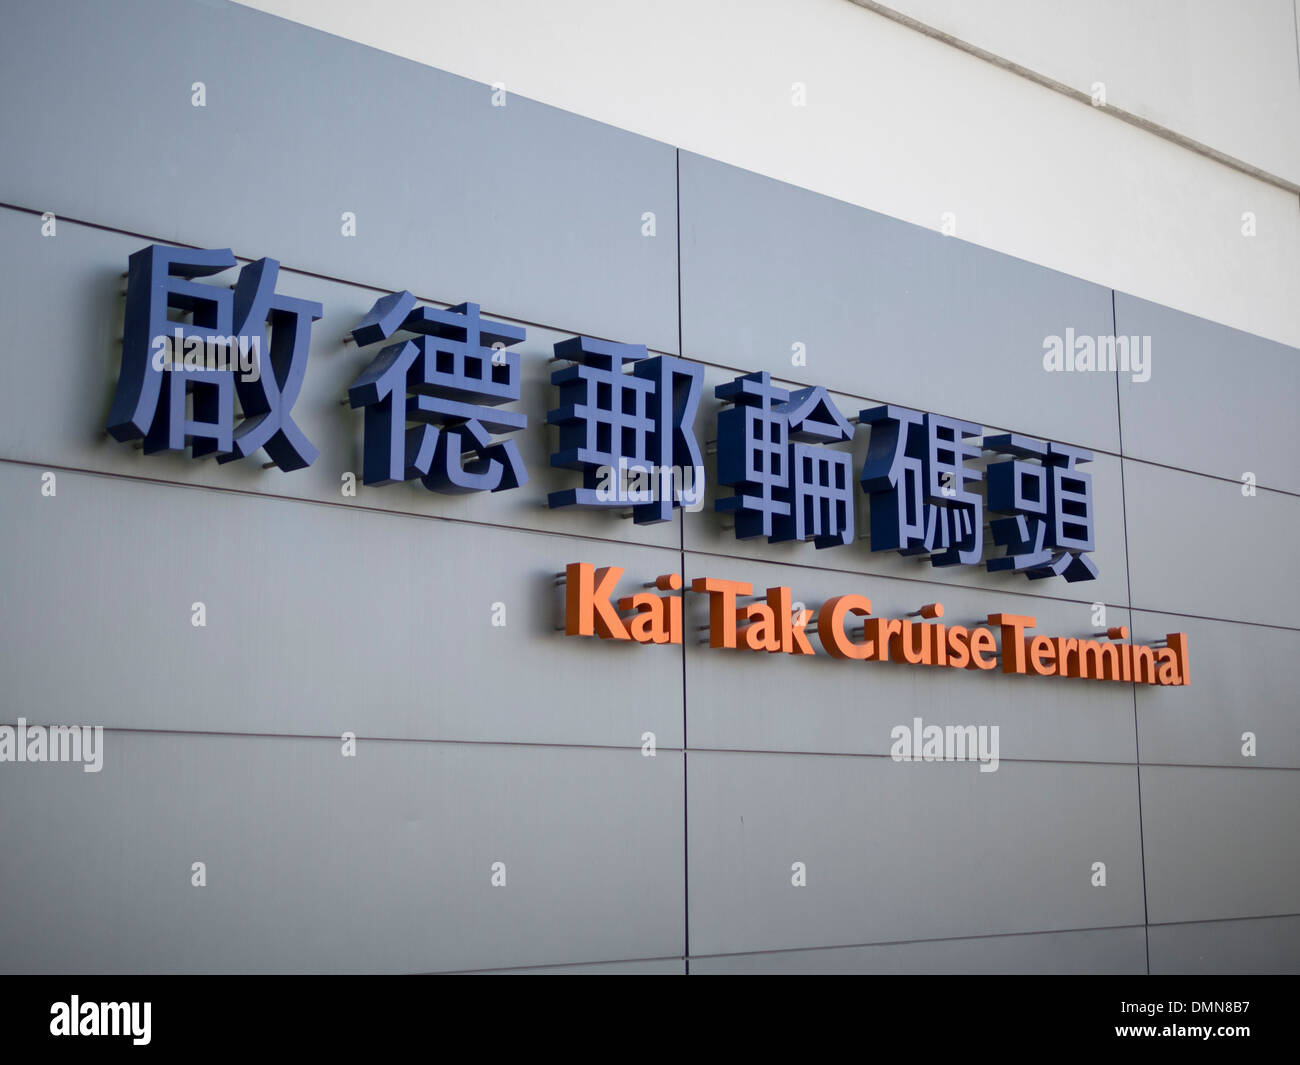 Kai Tak Cruise Ship Terminal Kowloon Bay Hong Kong Stock Photo